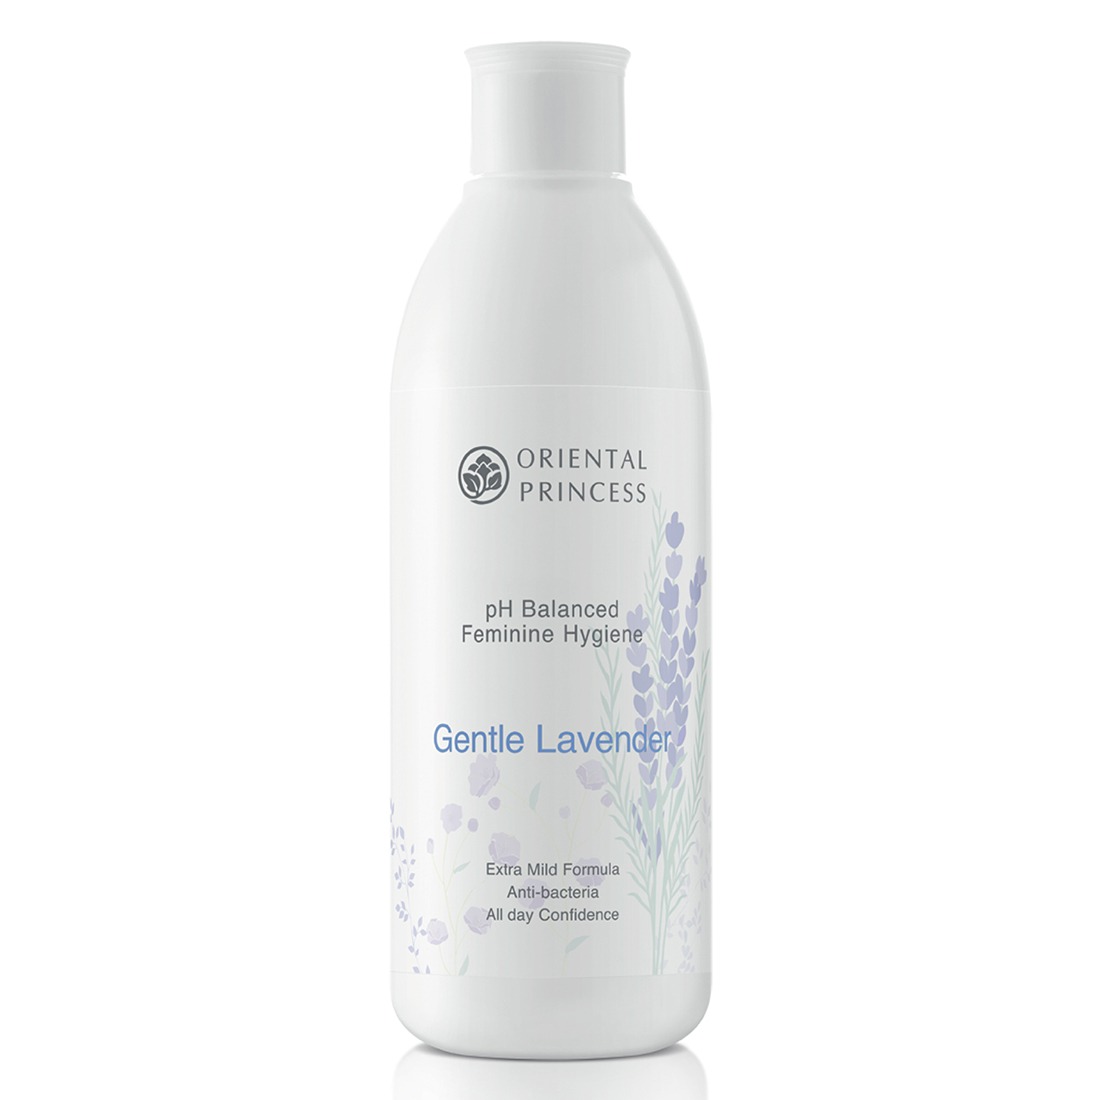 pH Balanced Feminine Hygiene Gentle Lavenderผลิตภัณฑ์เพื่อการทำความสะอาดส่วนที่บอบบางที่สุดของผู้หญิง